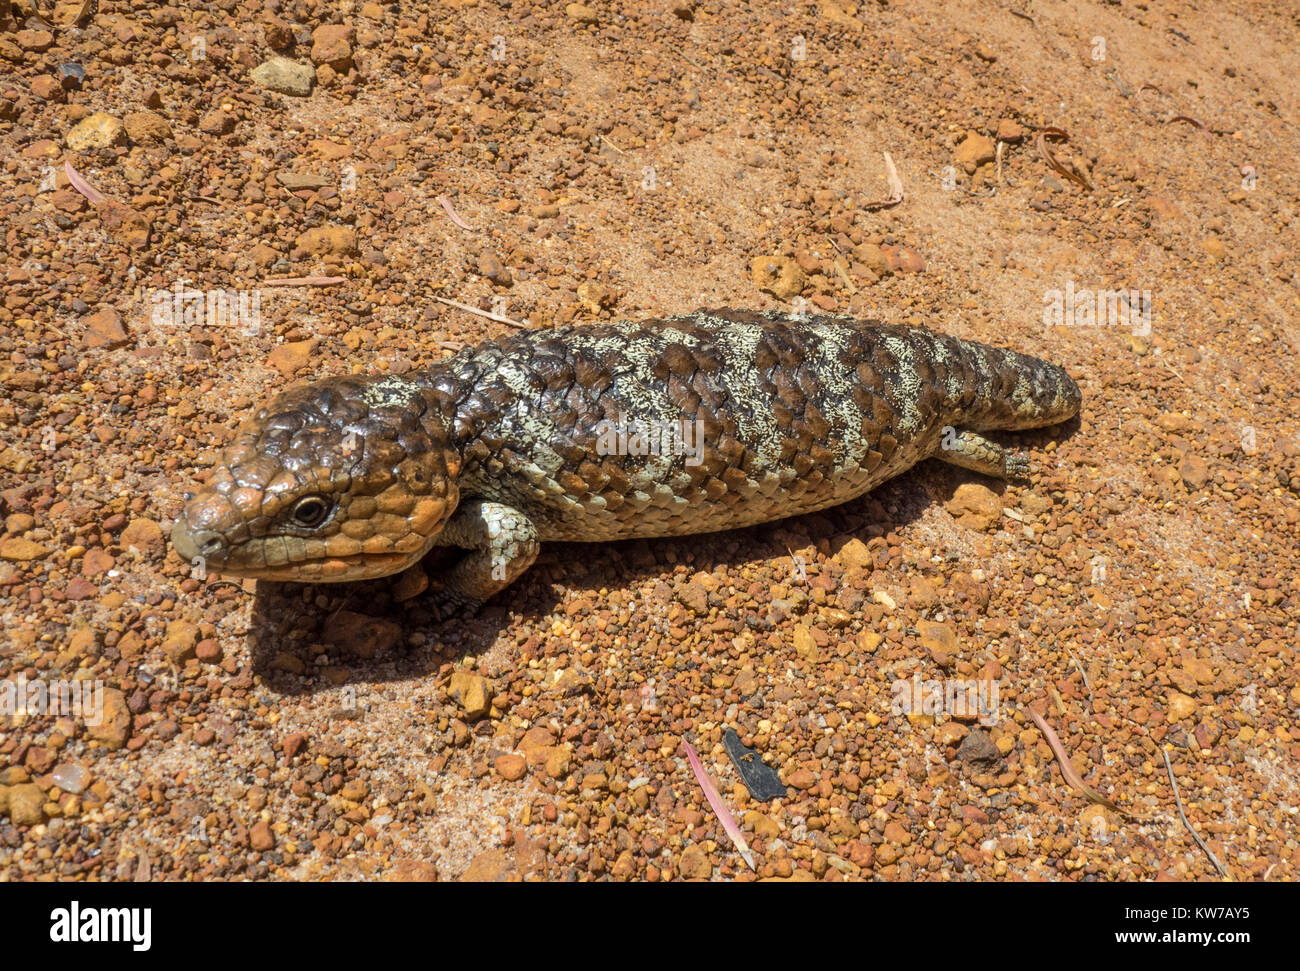 Tiliqua rugosa, or bobtail or blue tongue lizard. Stock Photo